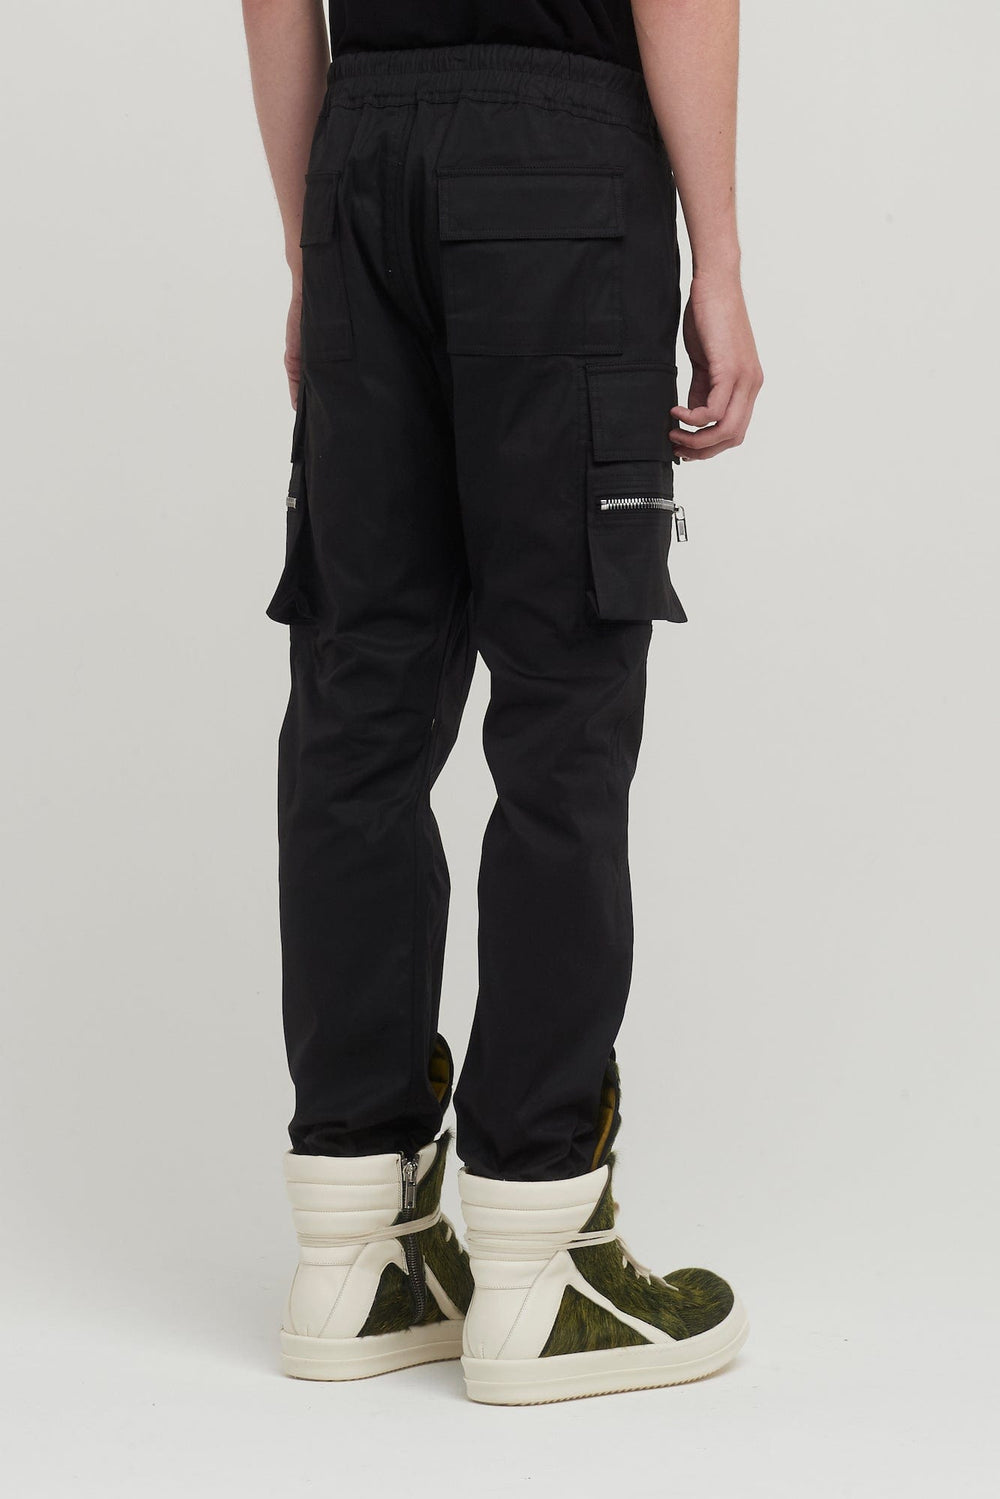 Rick Owens Mastodon Cargo Pants in Black – Antidote Fashion and